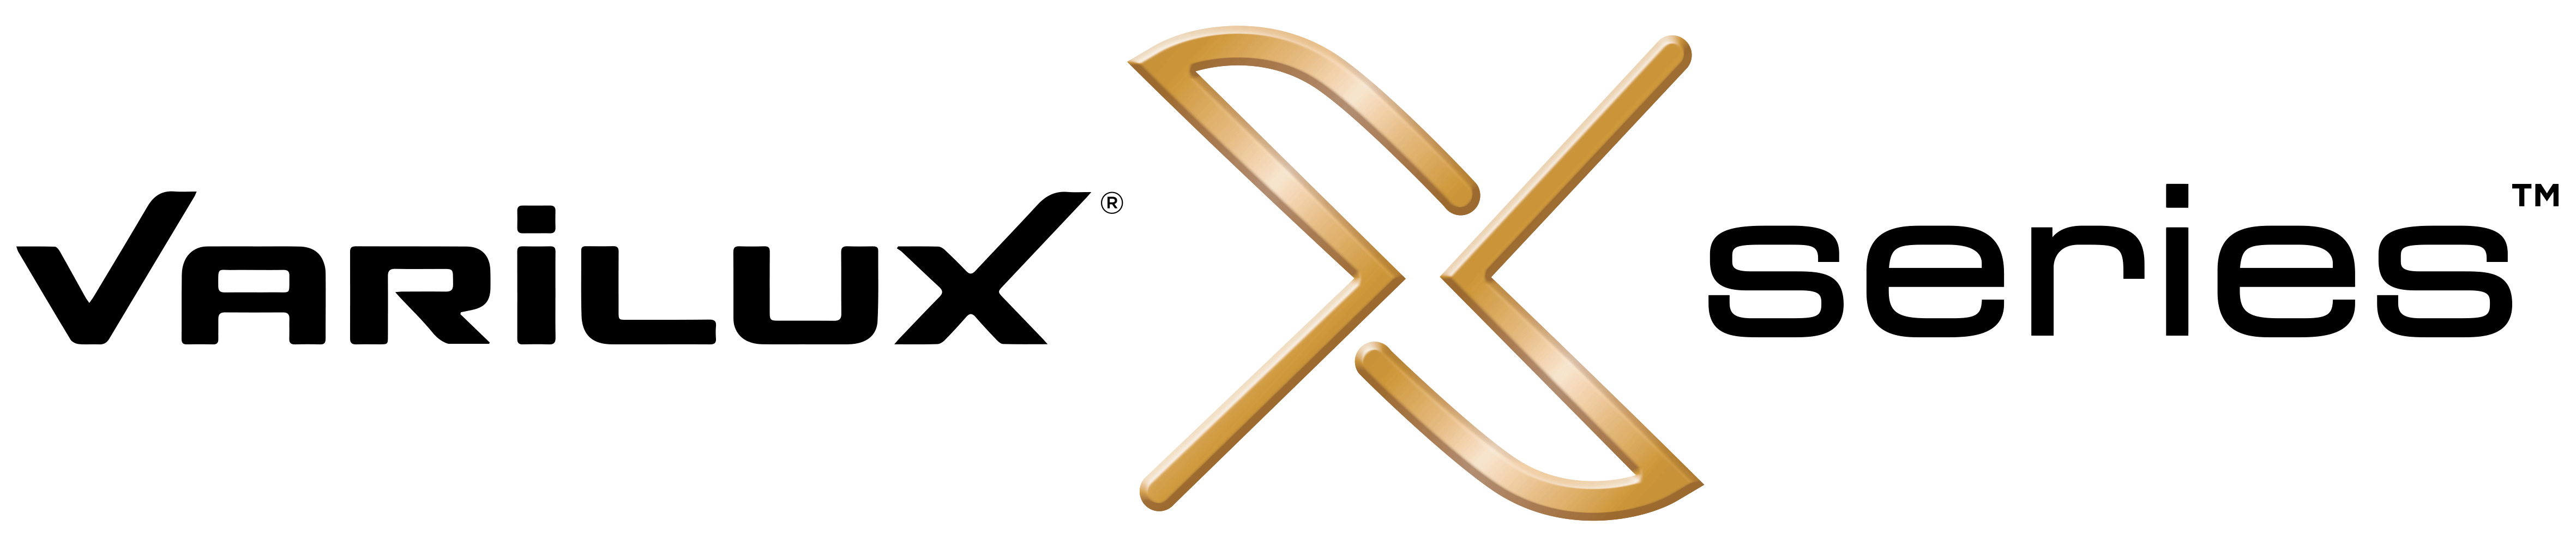 Varilux X Series